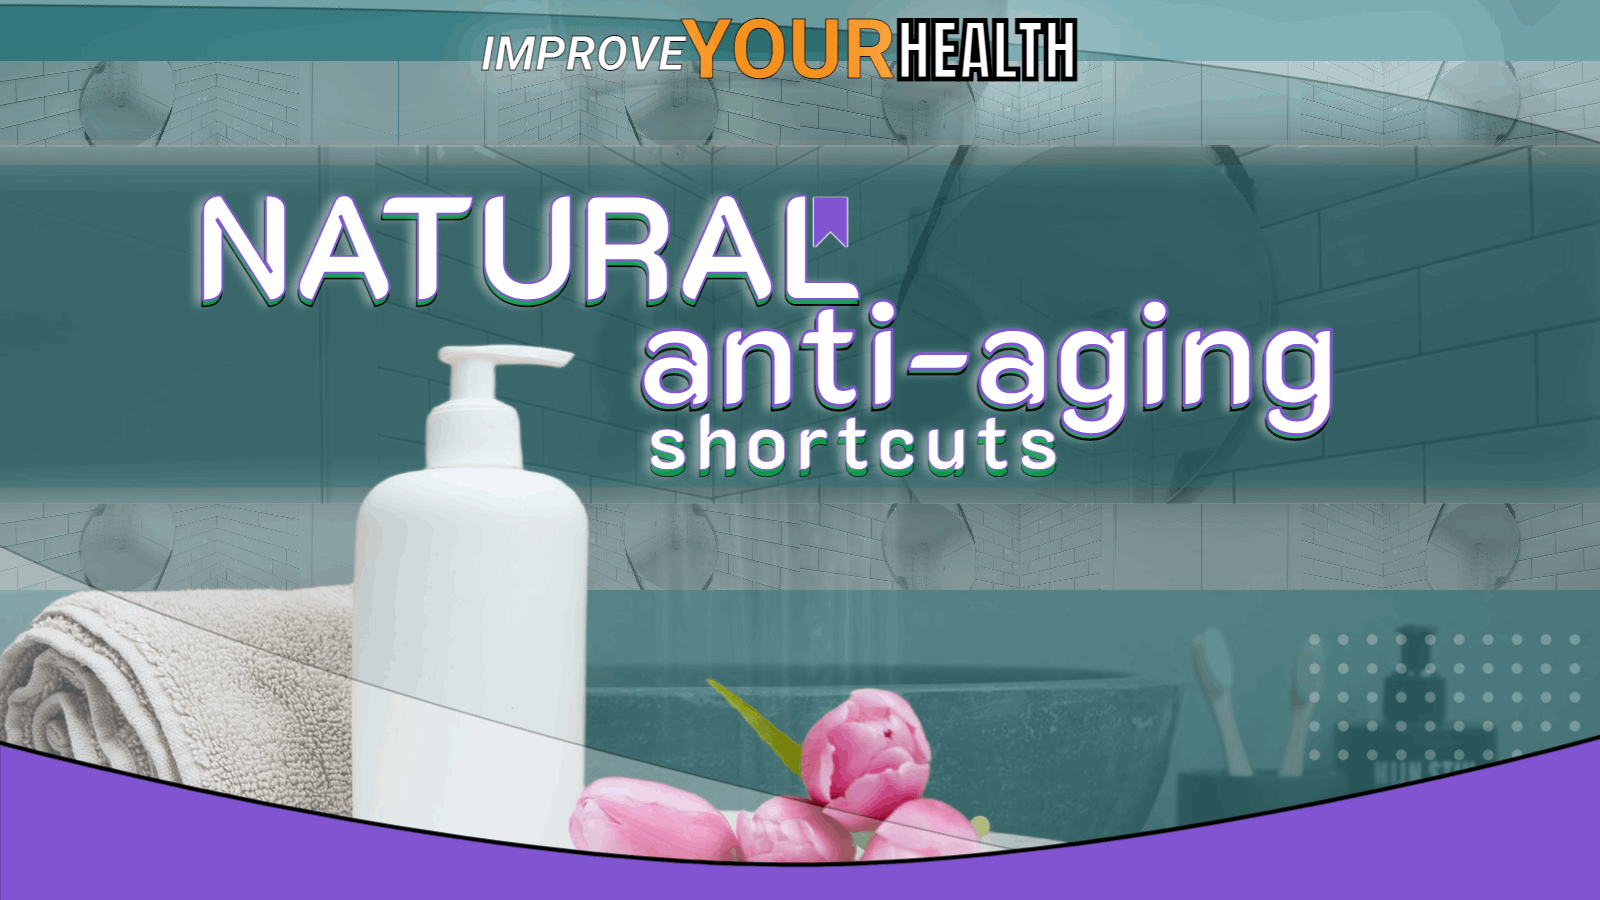 natural anti-aging shortcuts